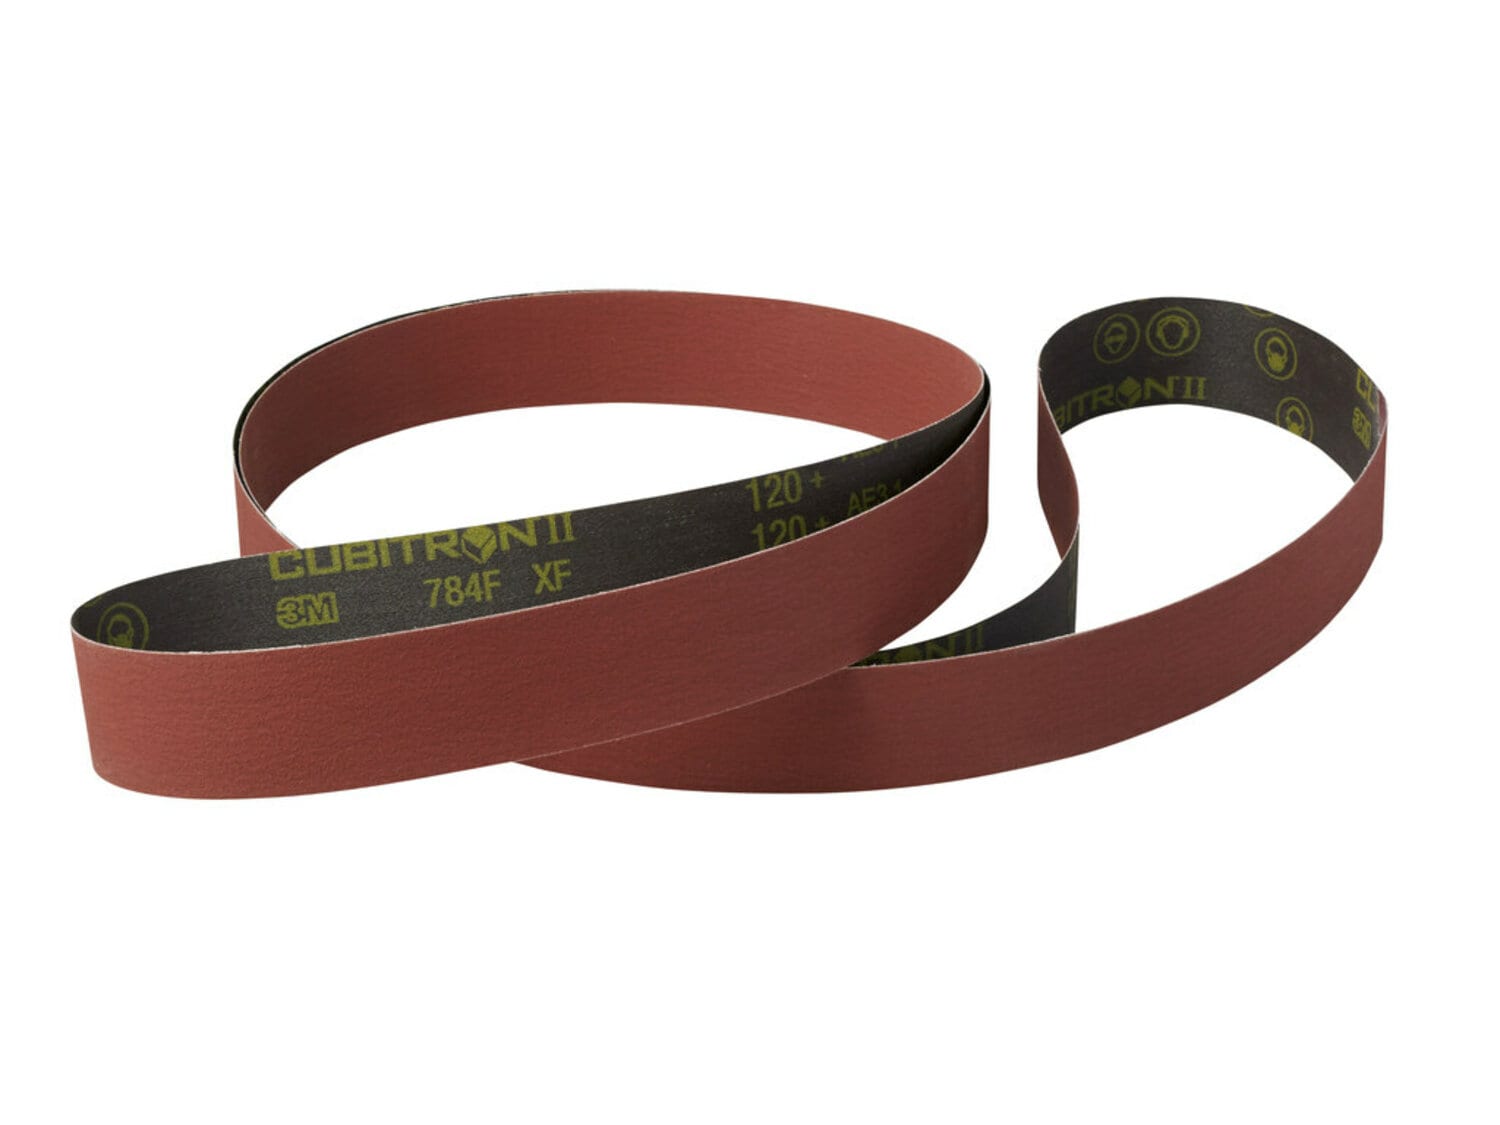 7100212390 - 3M Cubitron ll Cloth Belt 784F, 36+ YF-weight, 1 in x 132 in, Film-lok, Single-flex